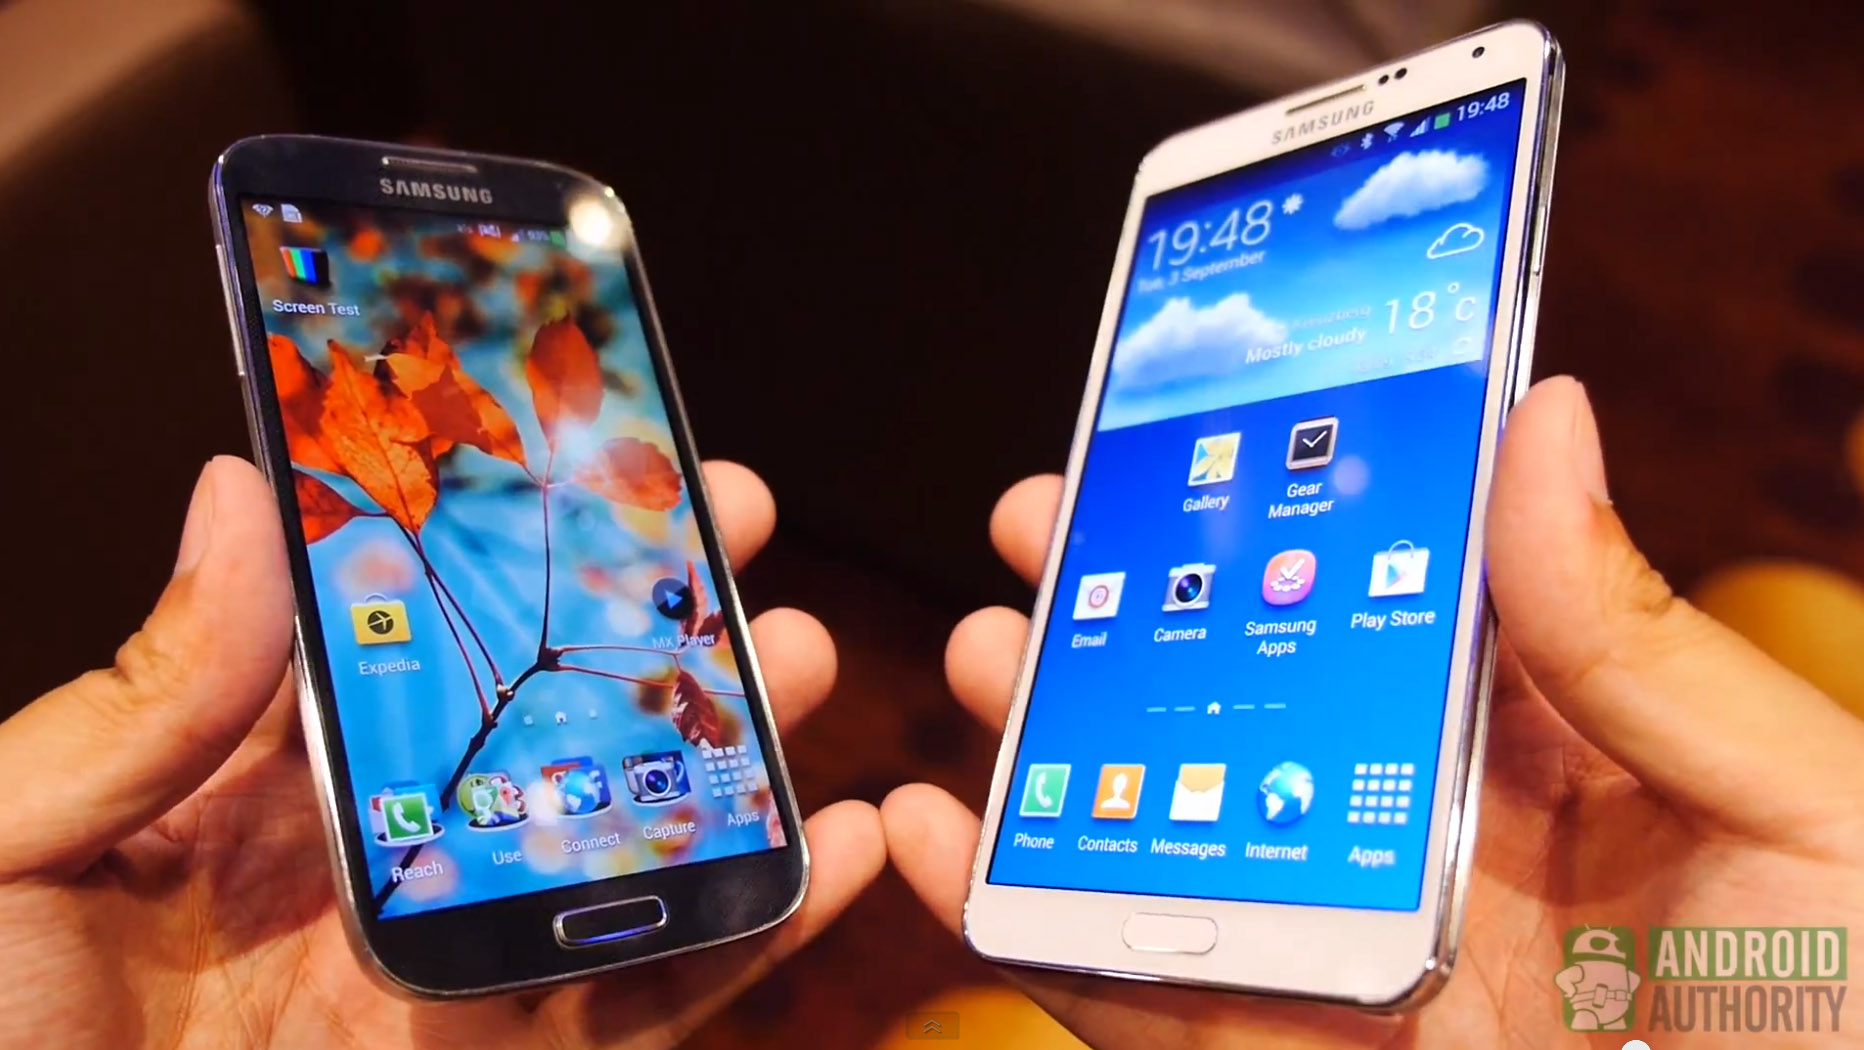 Samsung Galaxy Note 3 vs Galaxy S4 viewing angles AA